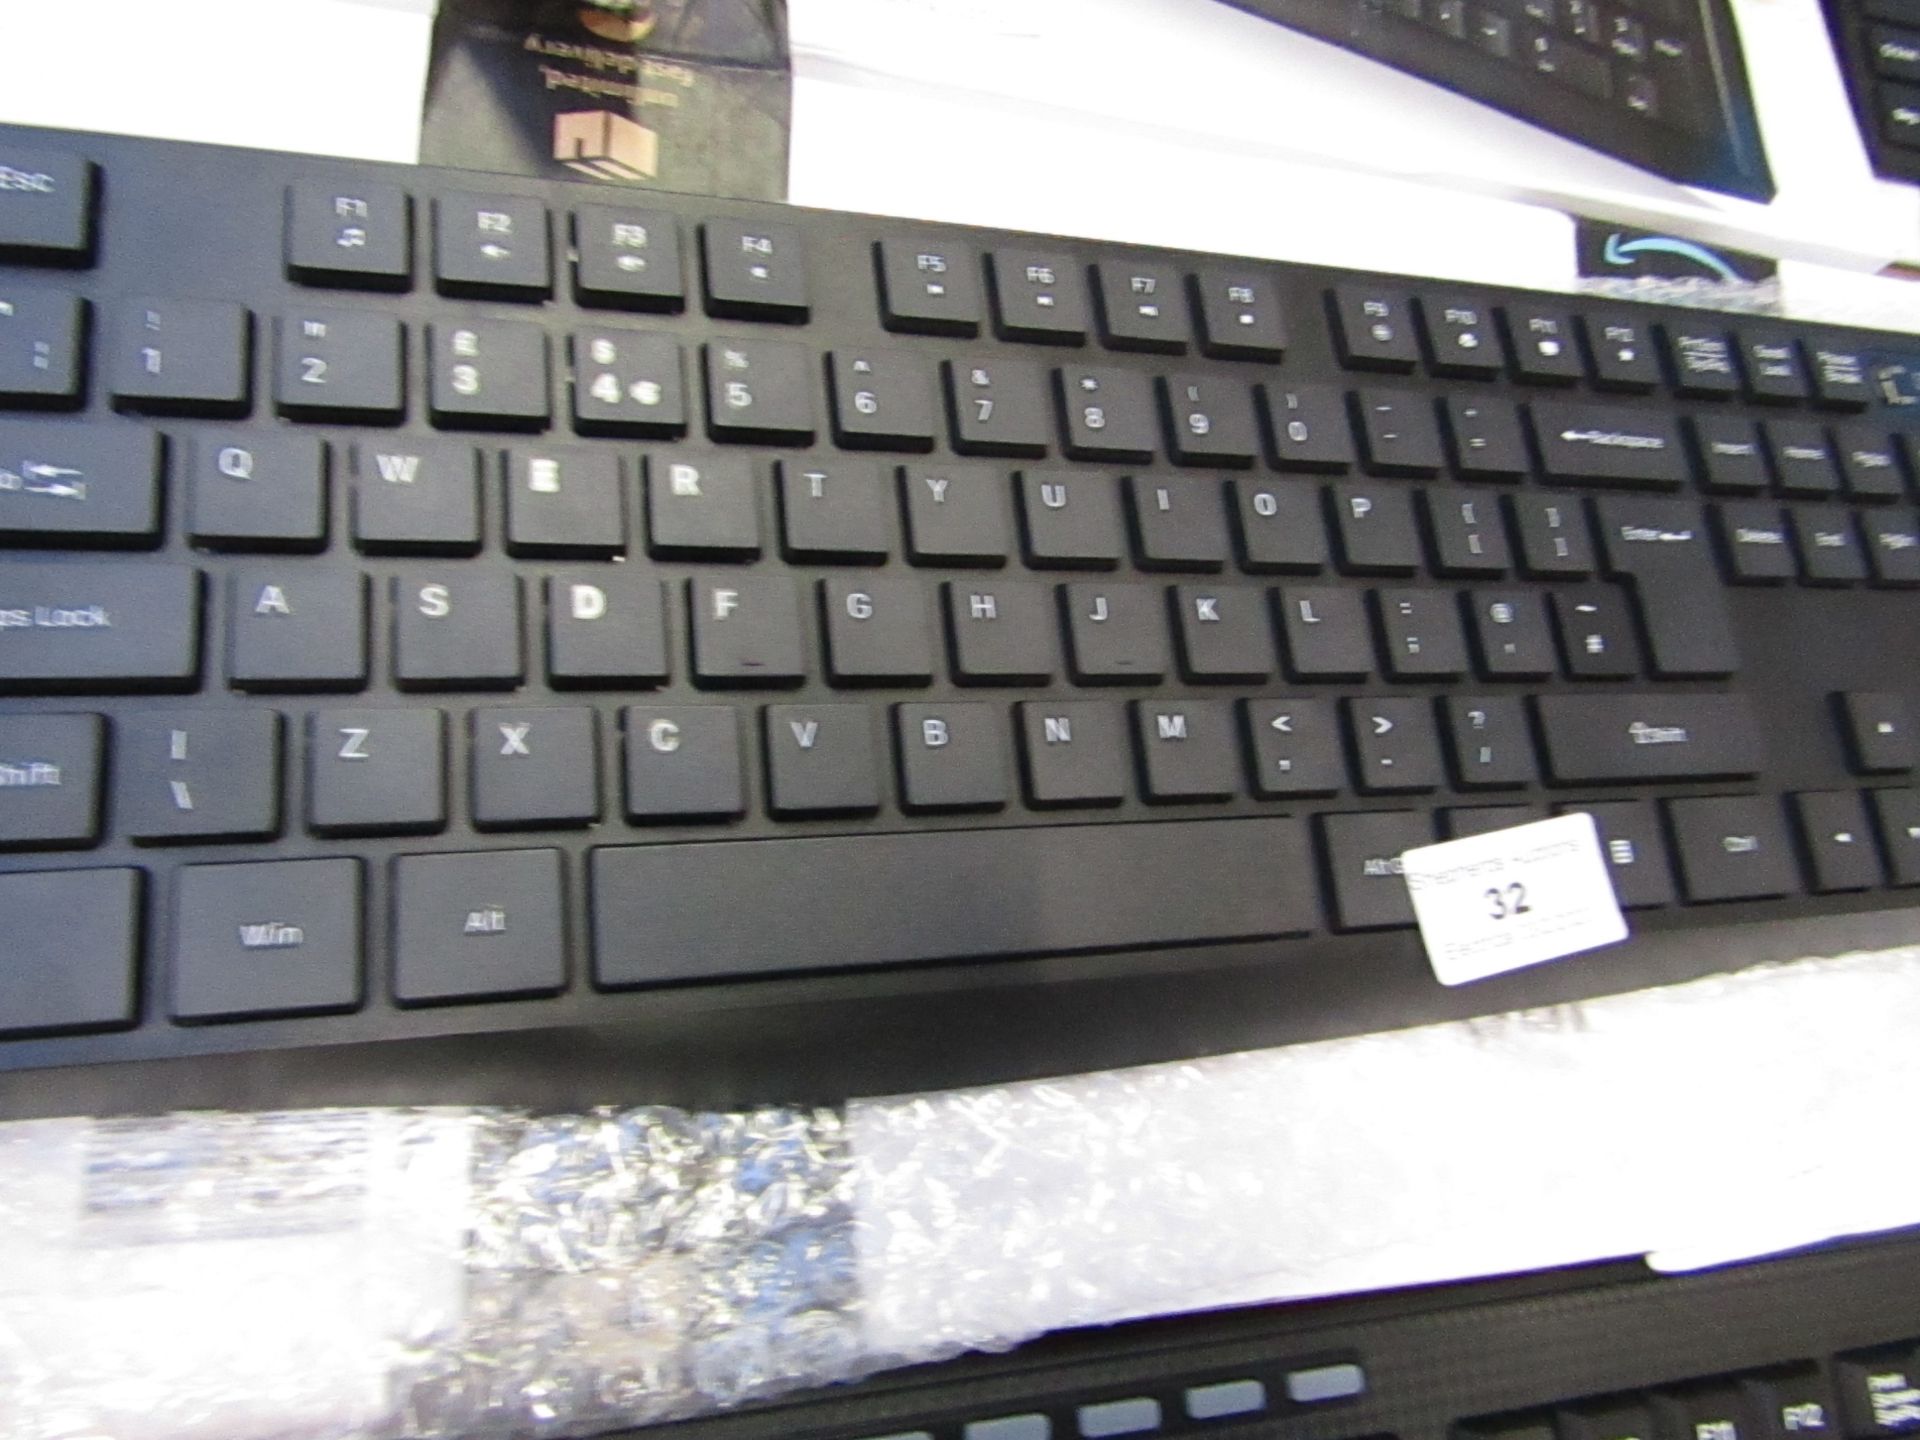 Black Wireless keyboard - Brand Unknown - Boxed.